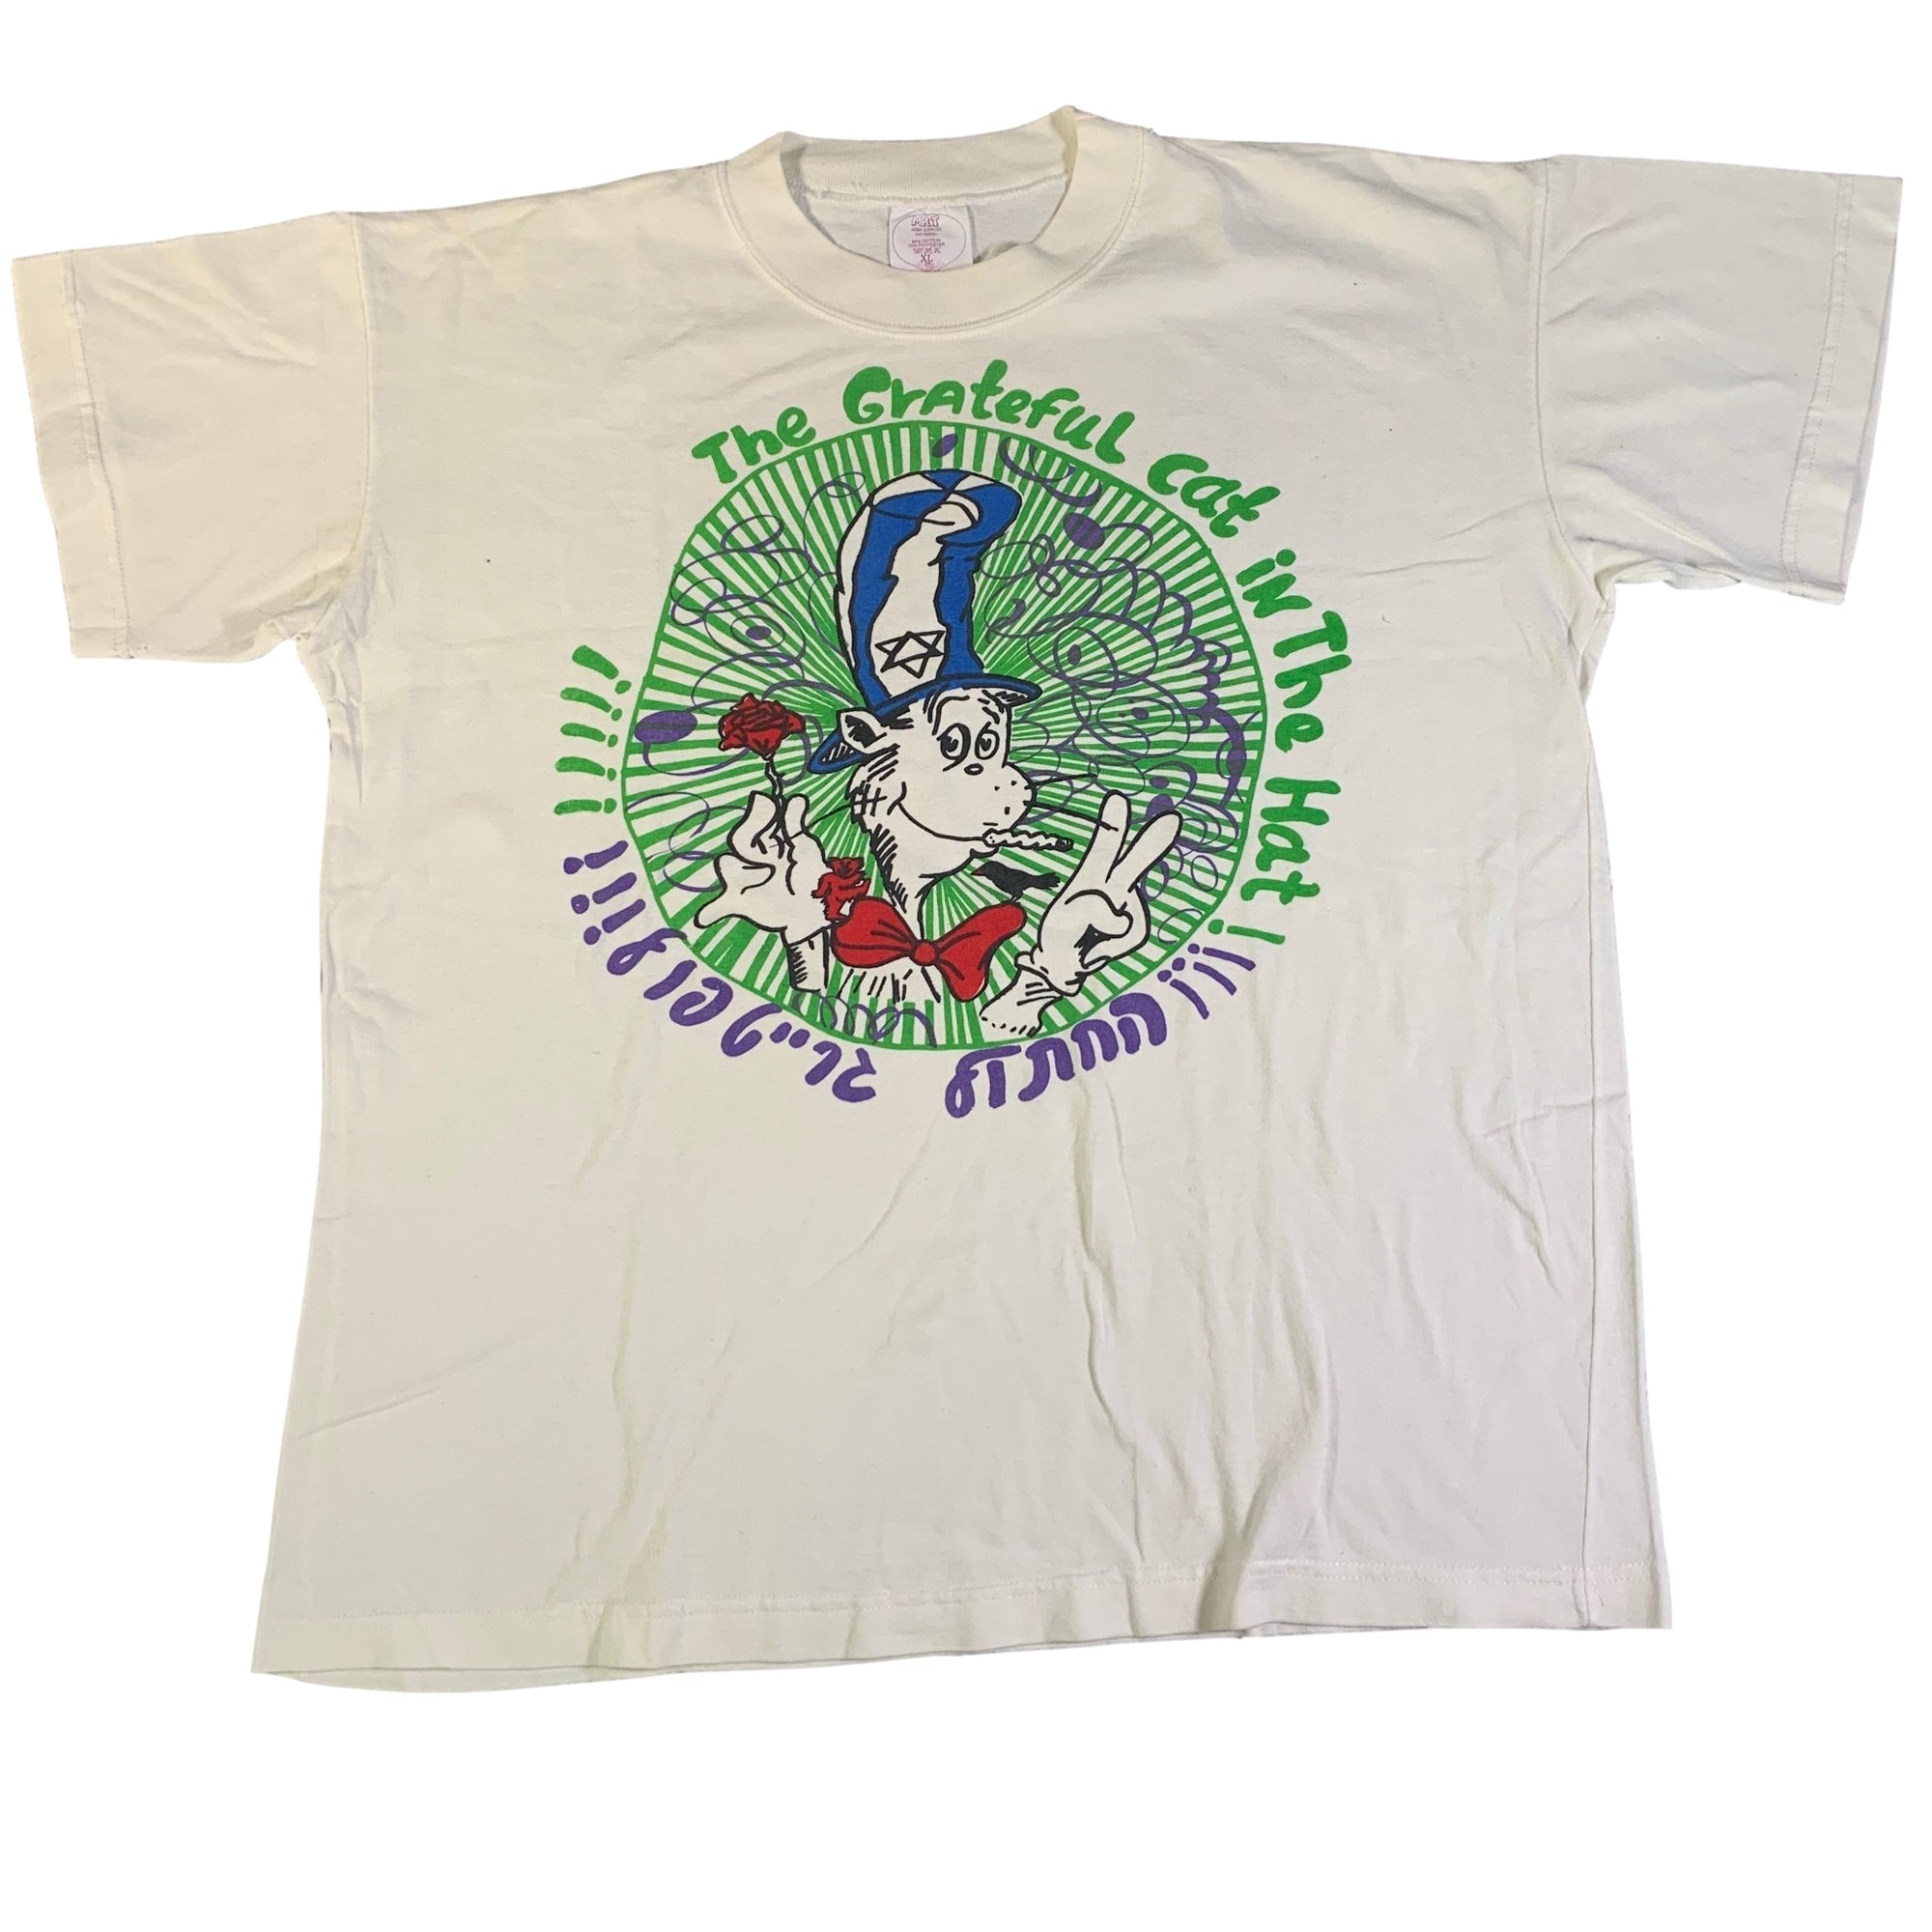 Vintage Grateful Dead "Cat In The Hat" T-Shirt - jointcustodydc